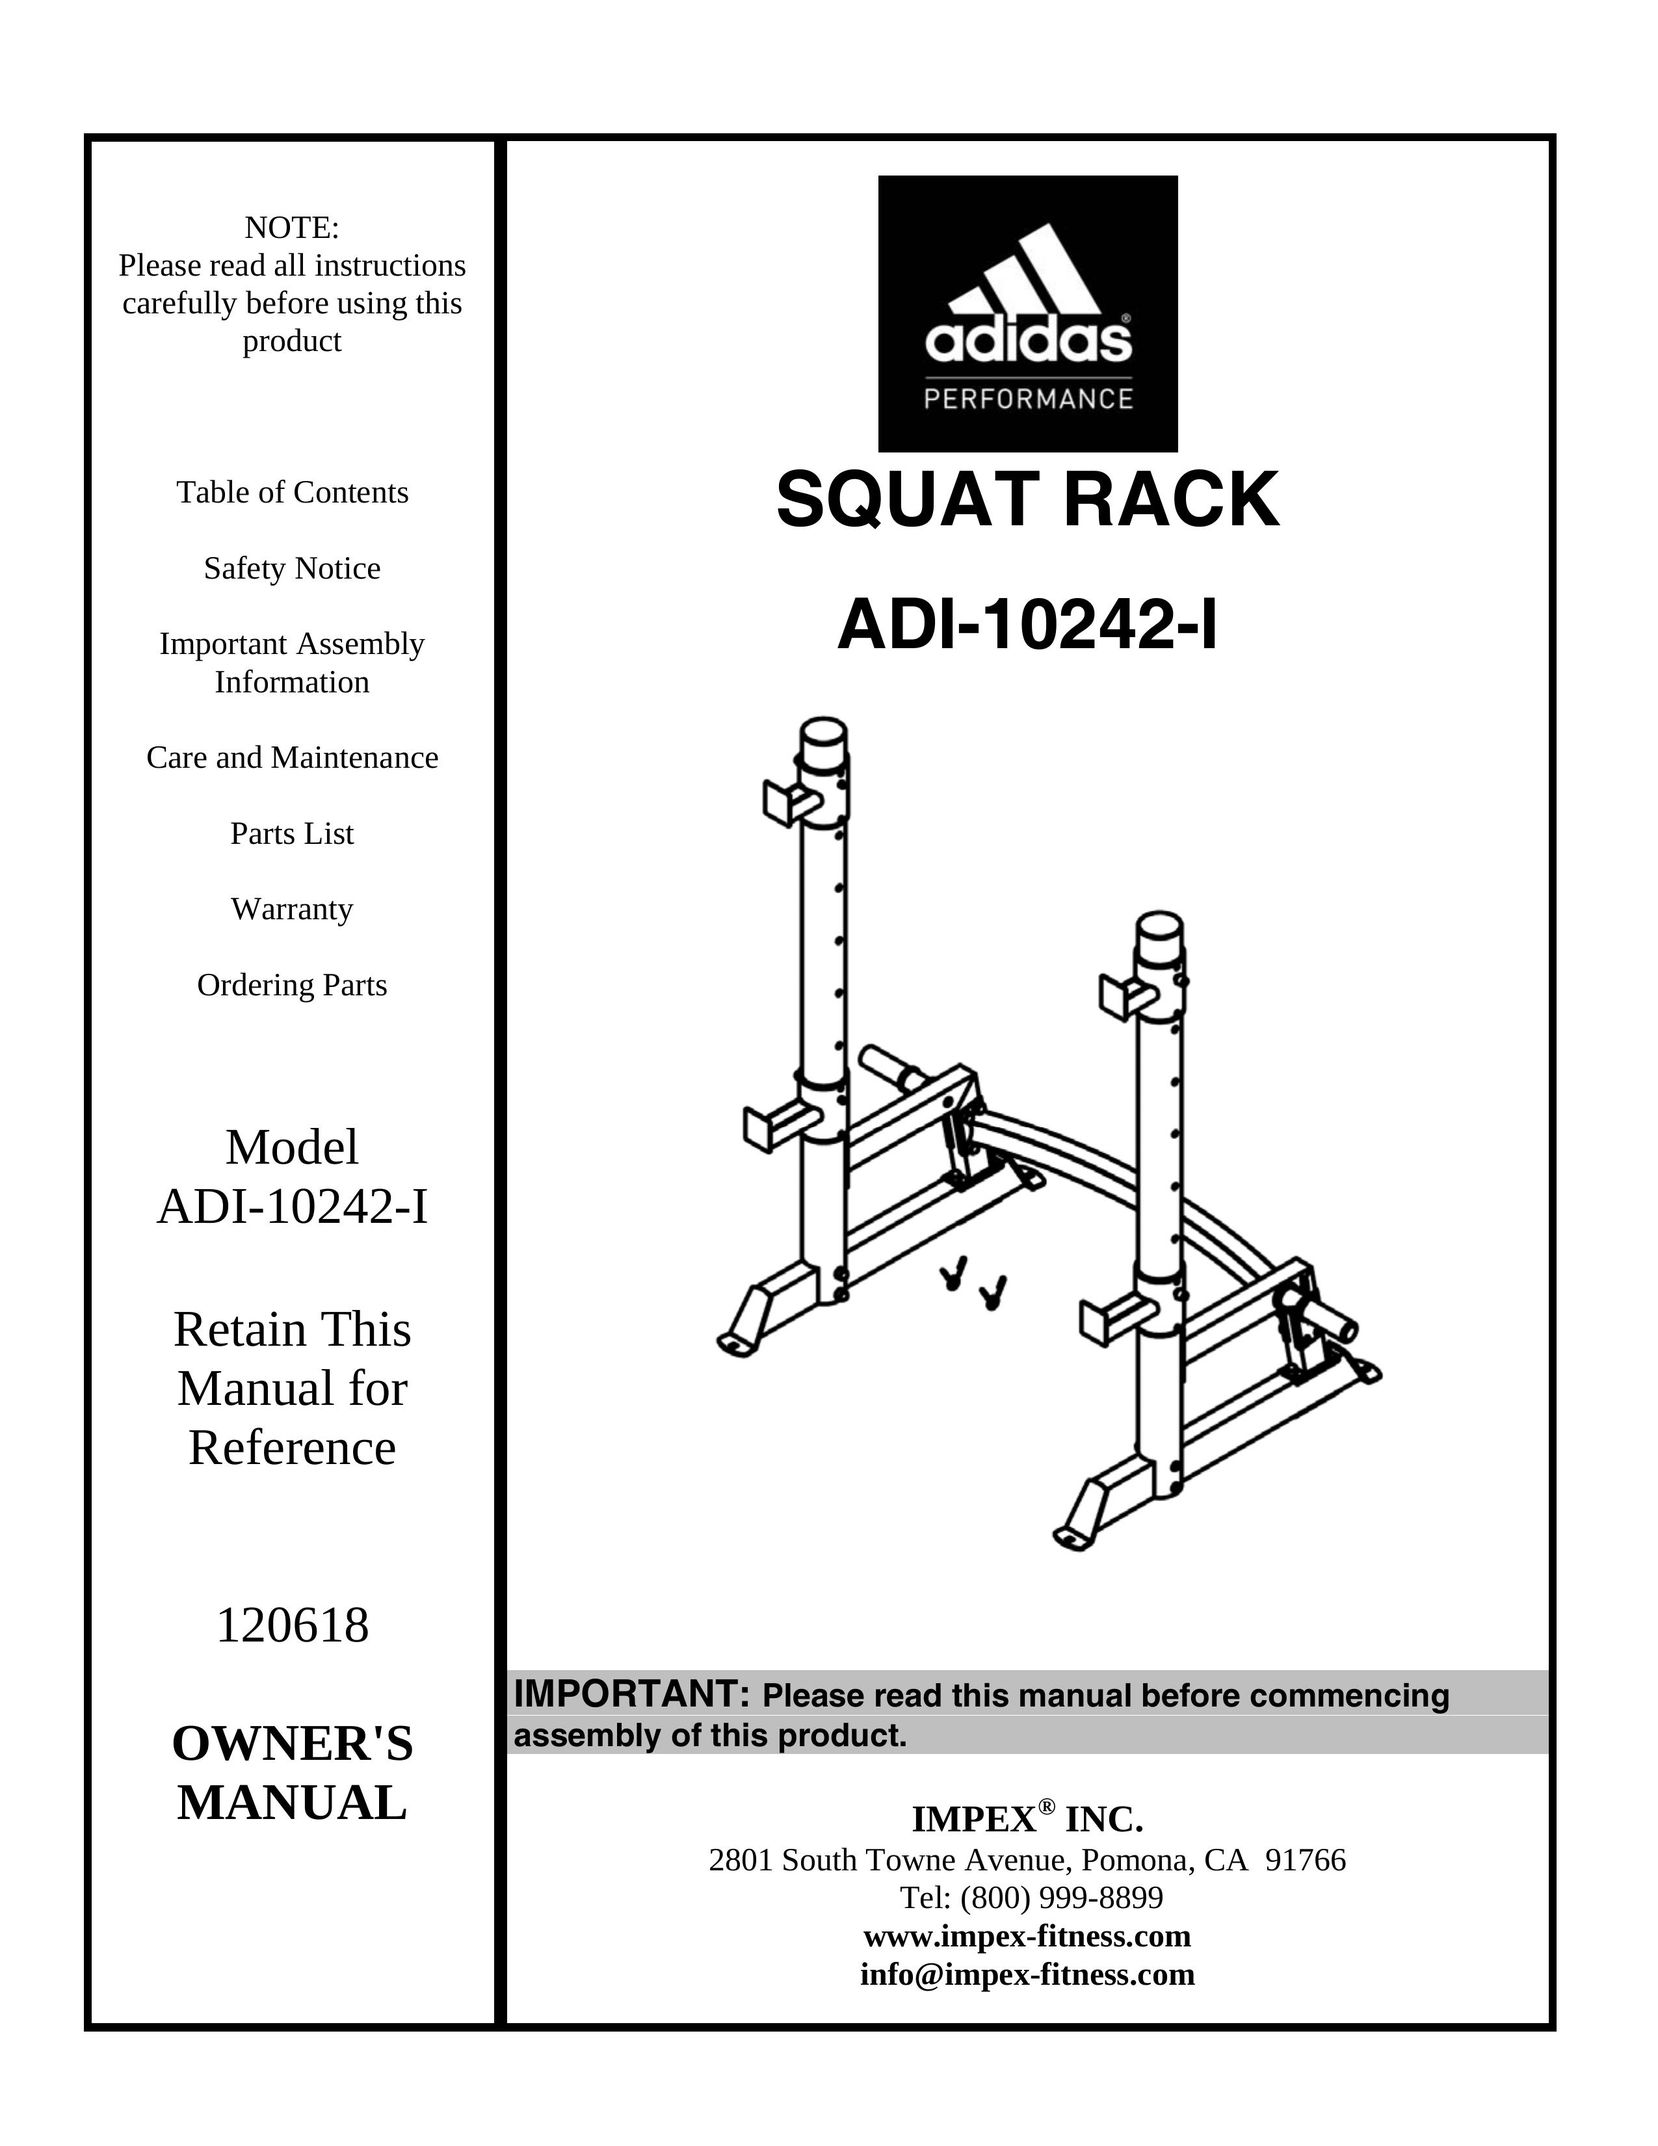 Impex ADI-10242-I Fitness Equipment User Manual